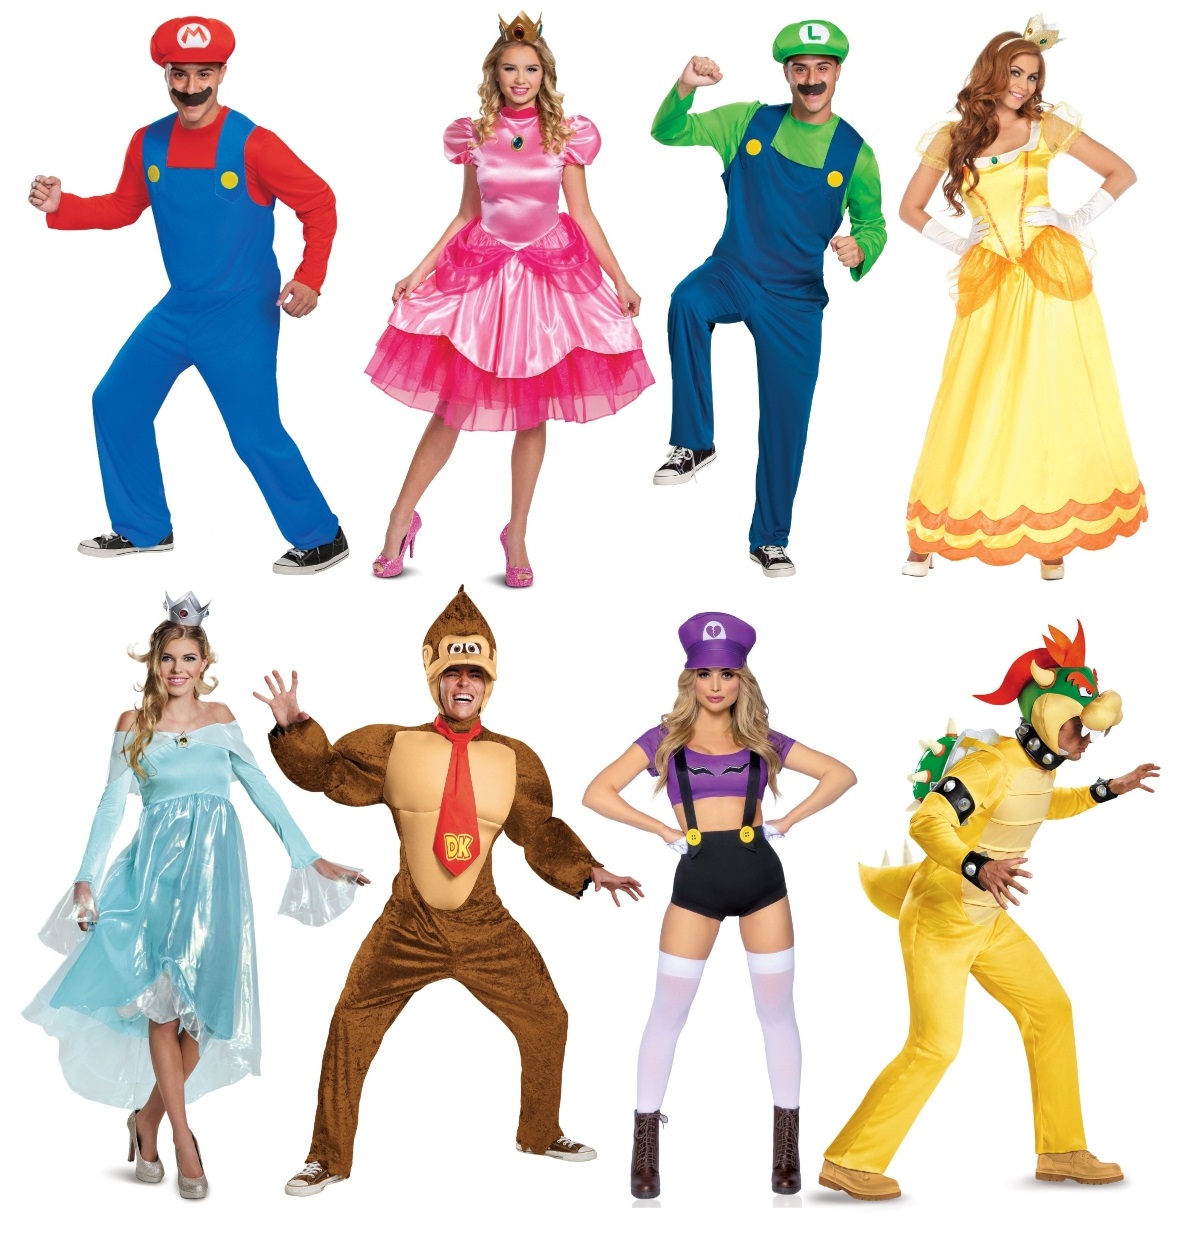 Mario Party Costumes